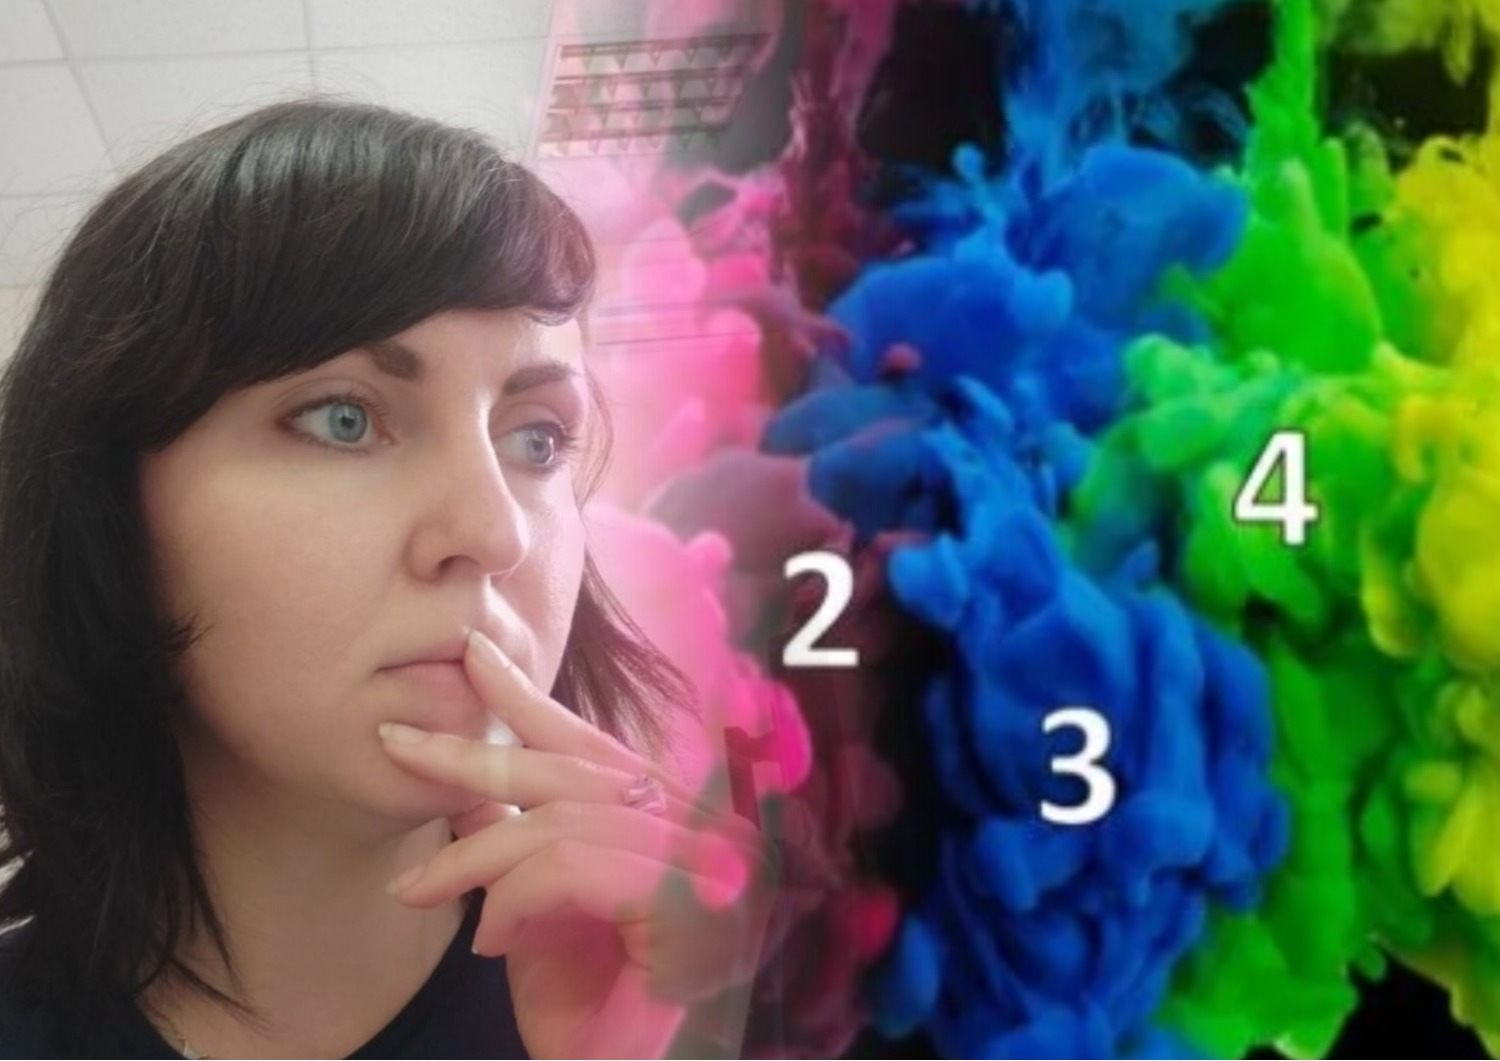 Тест дня для владимирцев: определите свой IQ по цвету